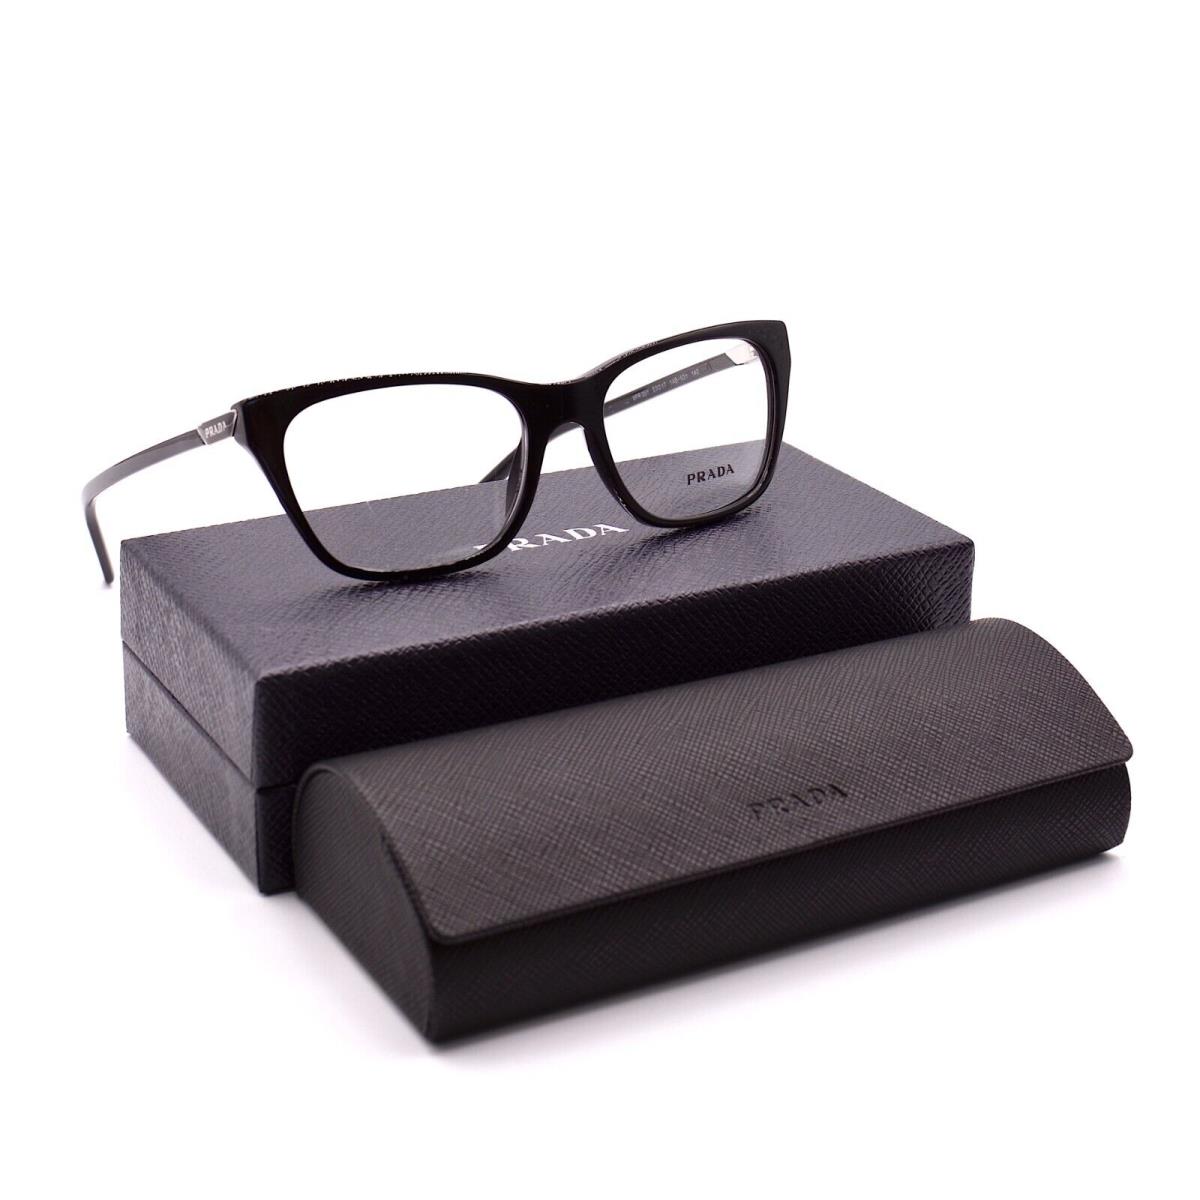 Prada eyeglasses  - Frame: Black 7